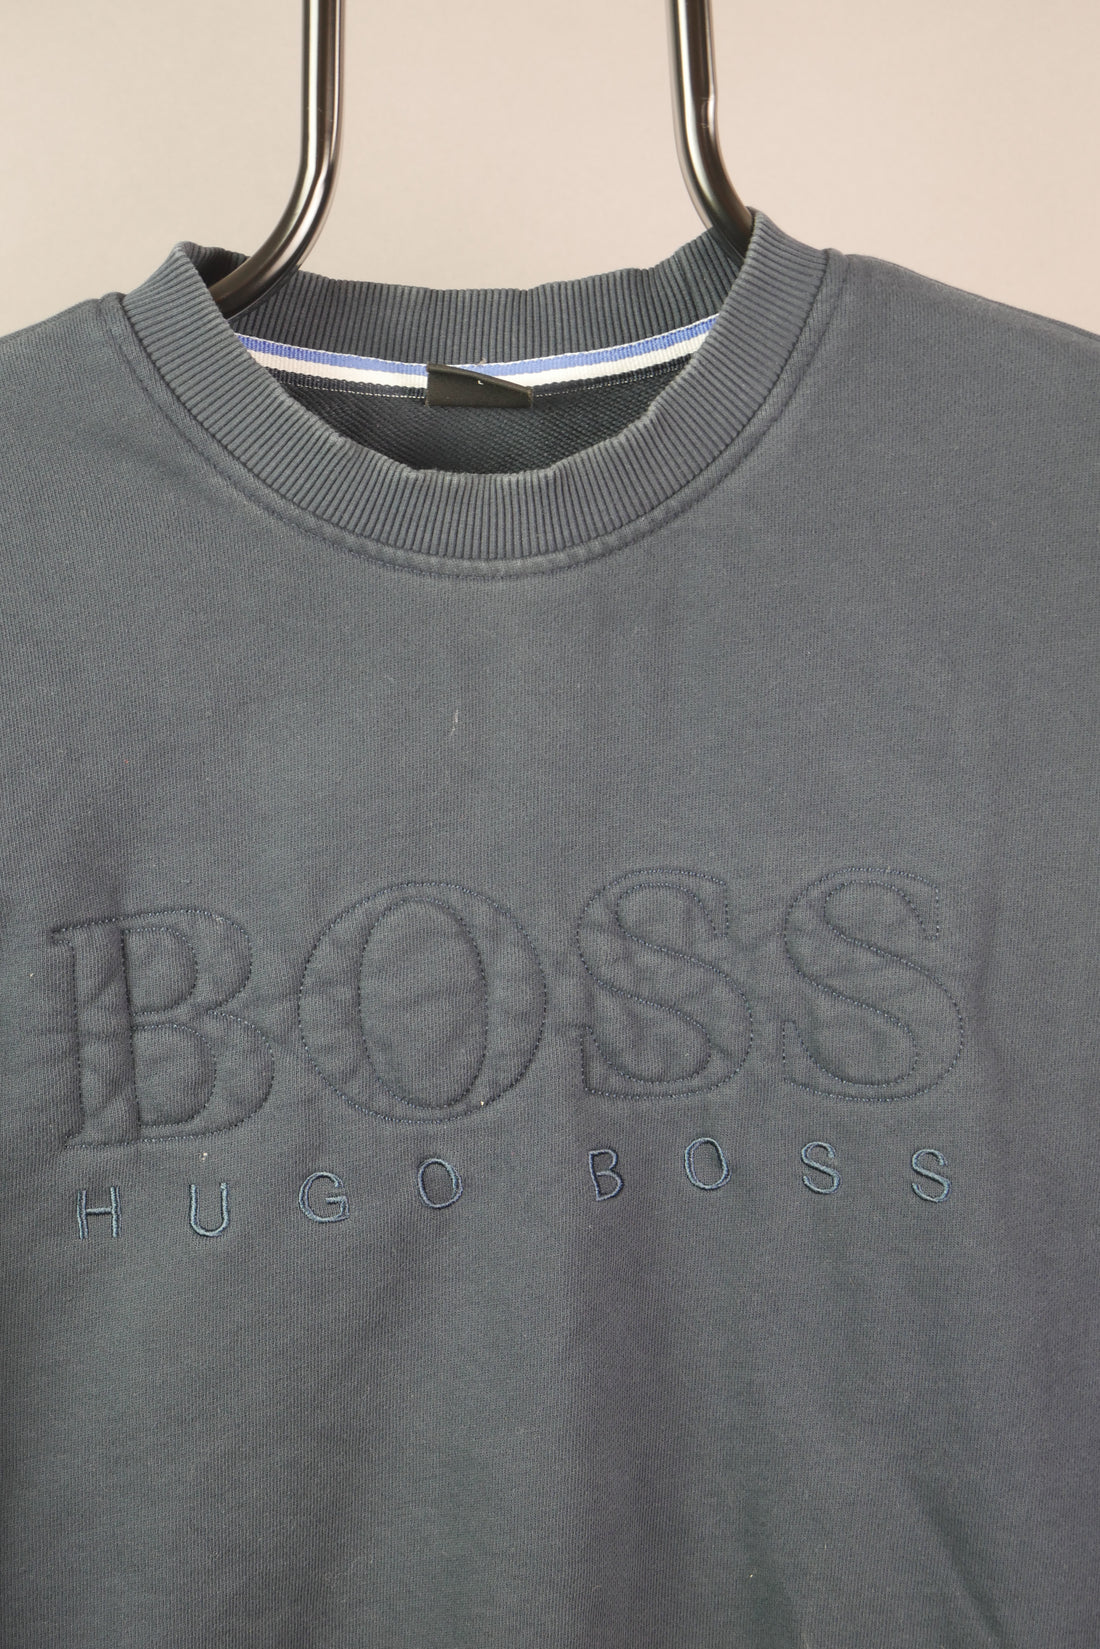 The Hugo Boss Sweatshirt (L)